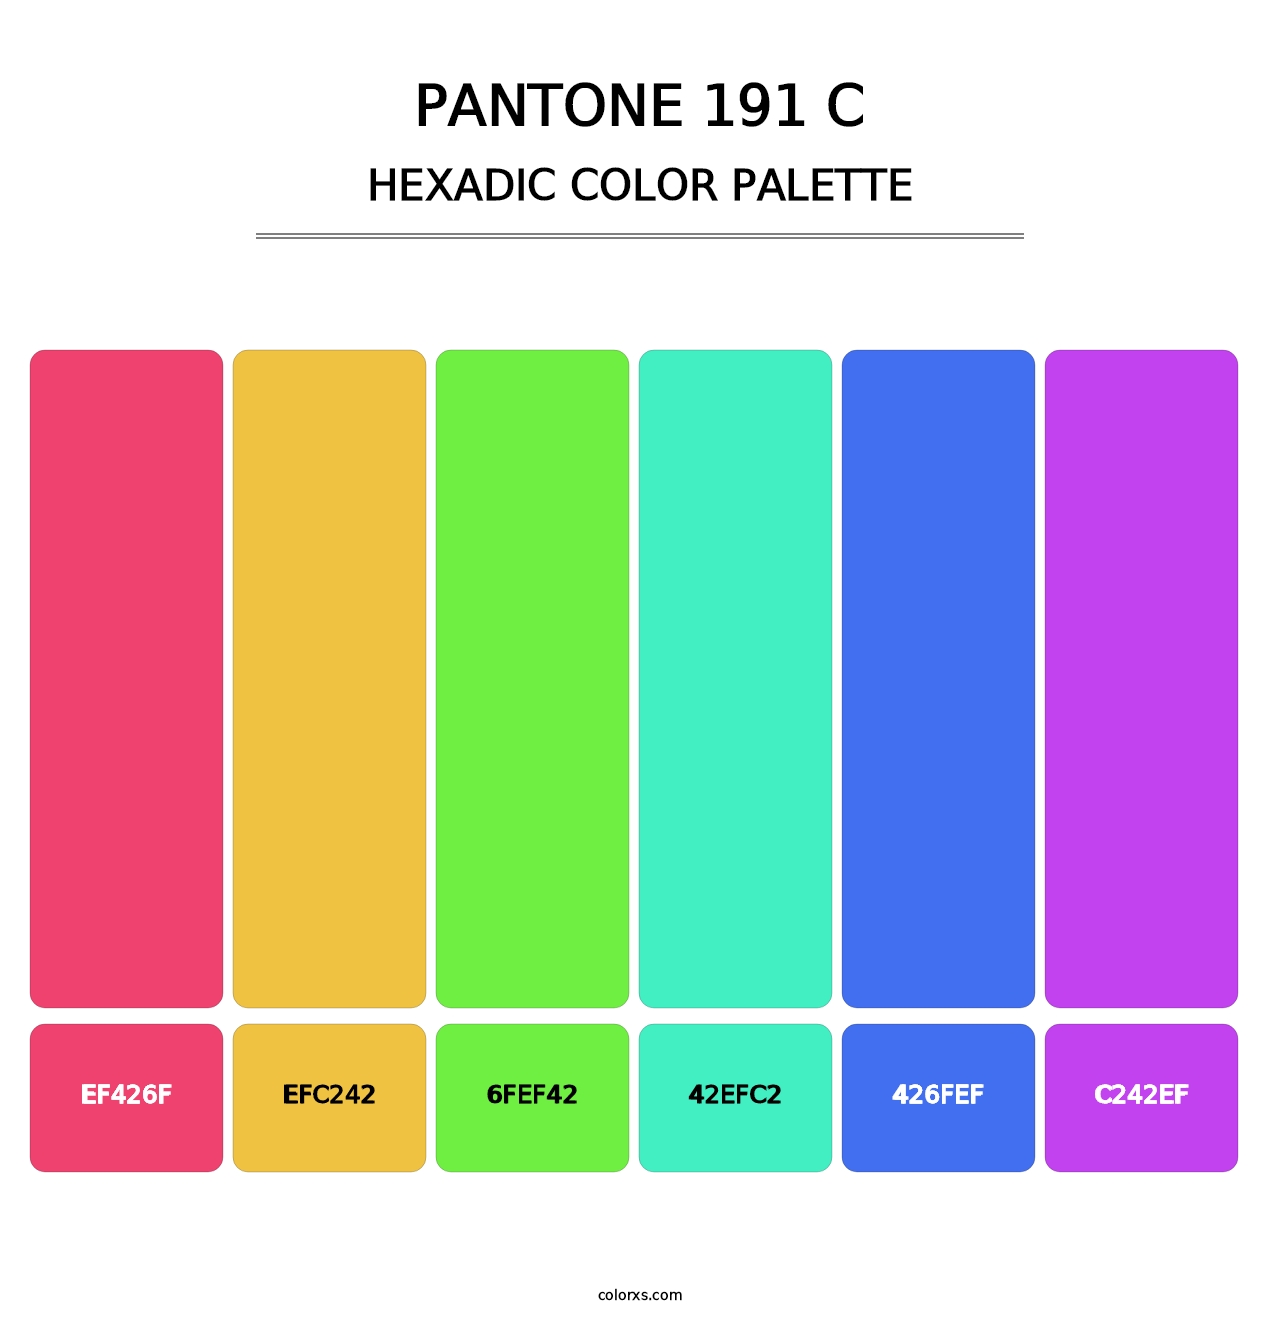 PANTONE 191 C - Hexadic Color Palette